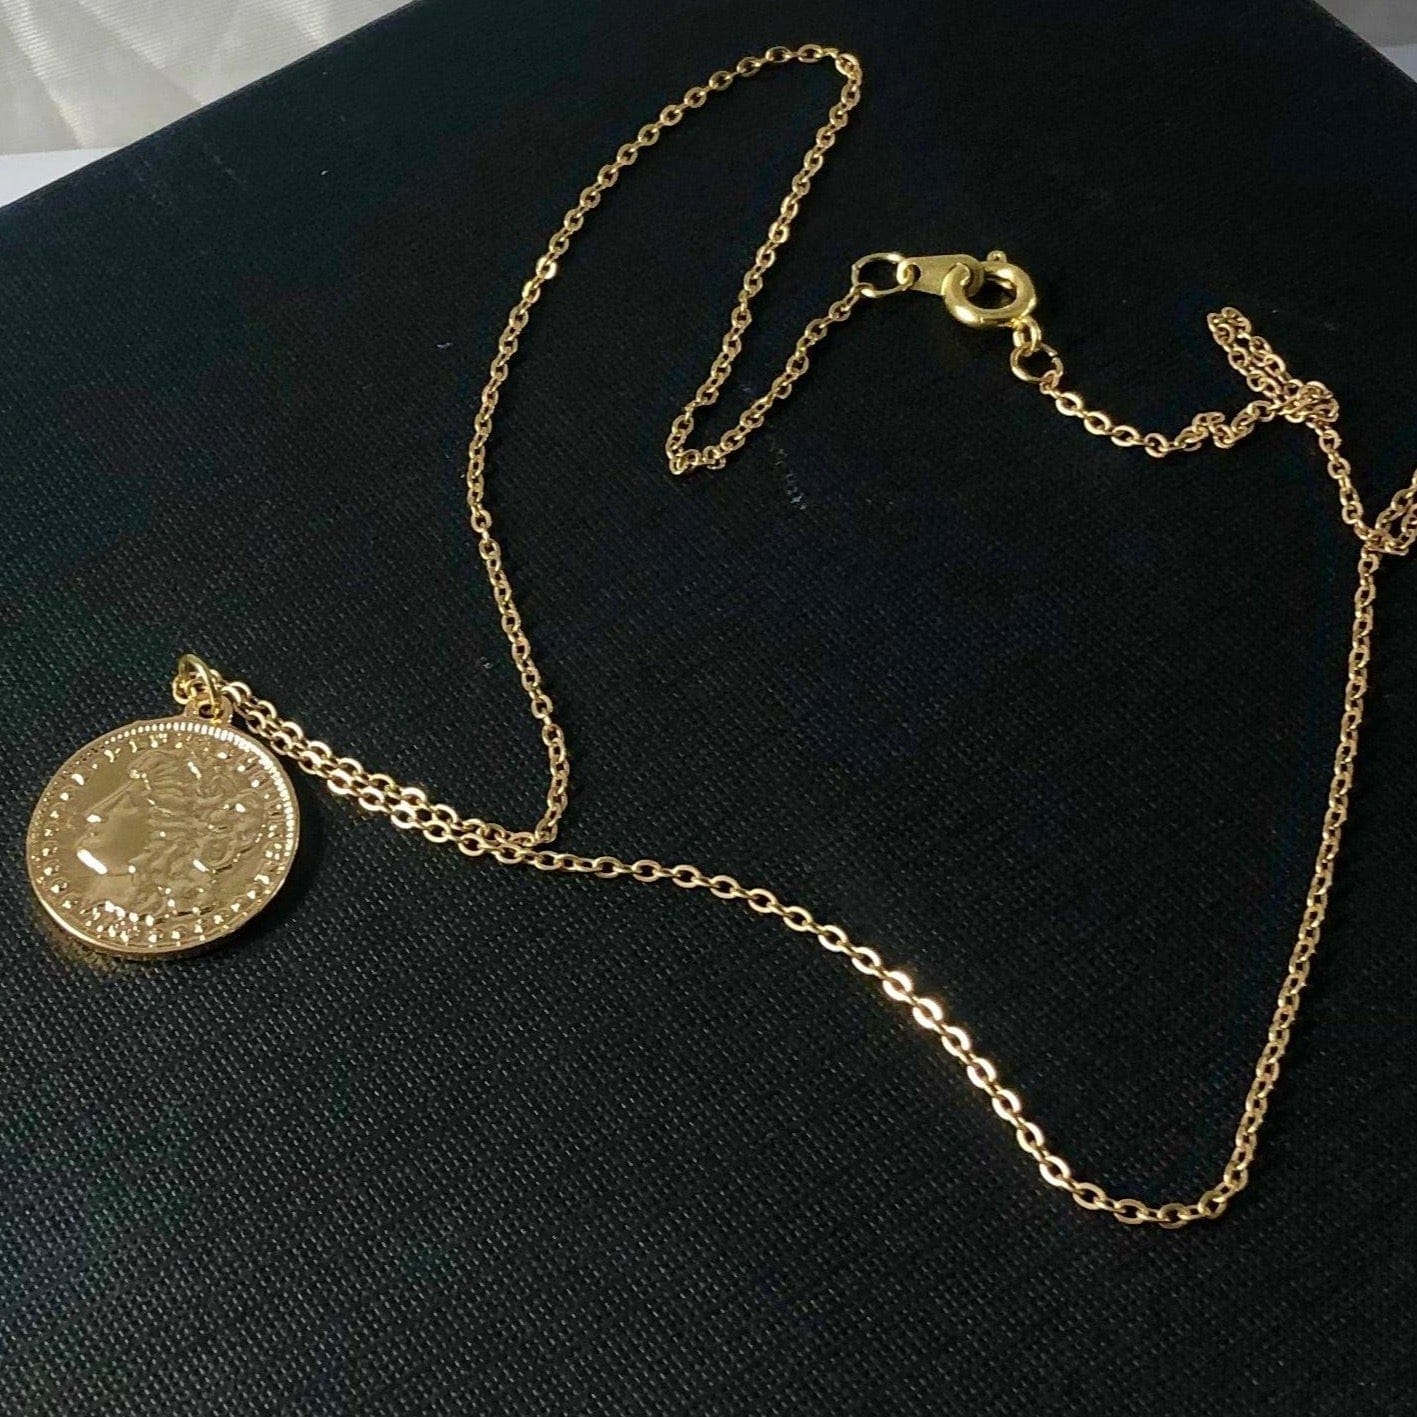 Coin Pendant Necklace KAS WARWAS